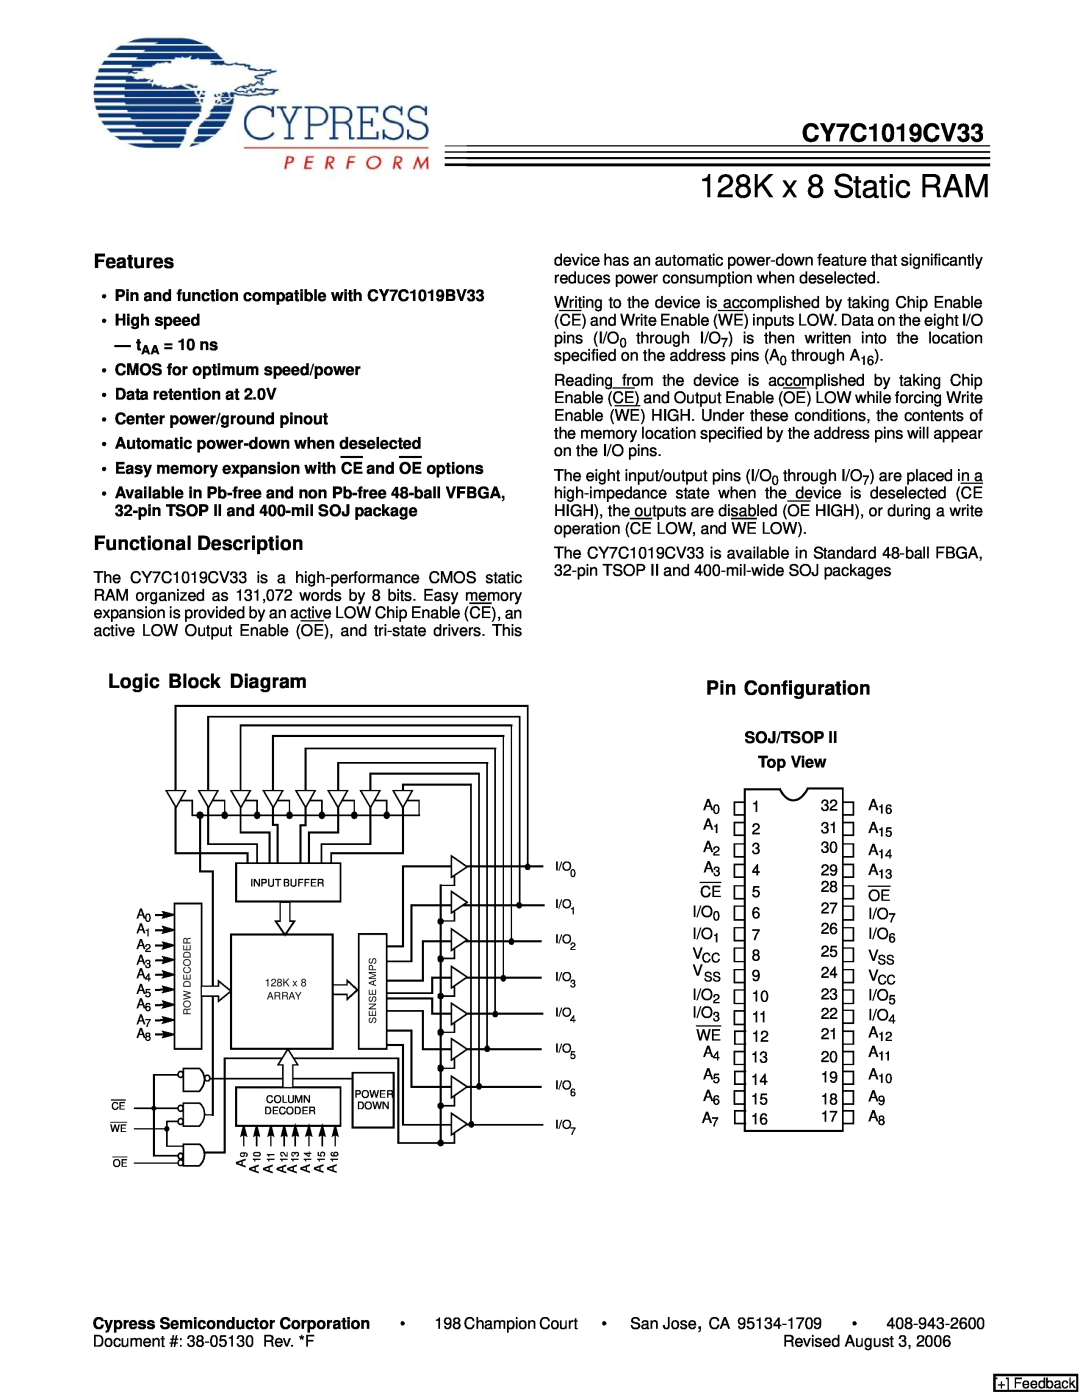 Cypress CY7C1019CV33 manual Features, Functional Description, Logic Block Diagram, Pin Configuration, SOJ/TSOP Top View 